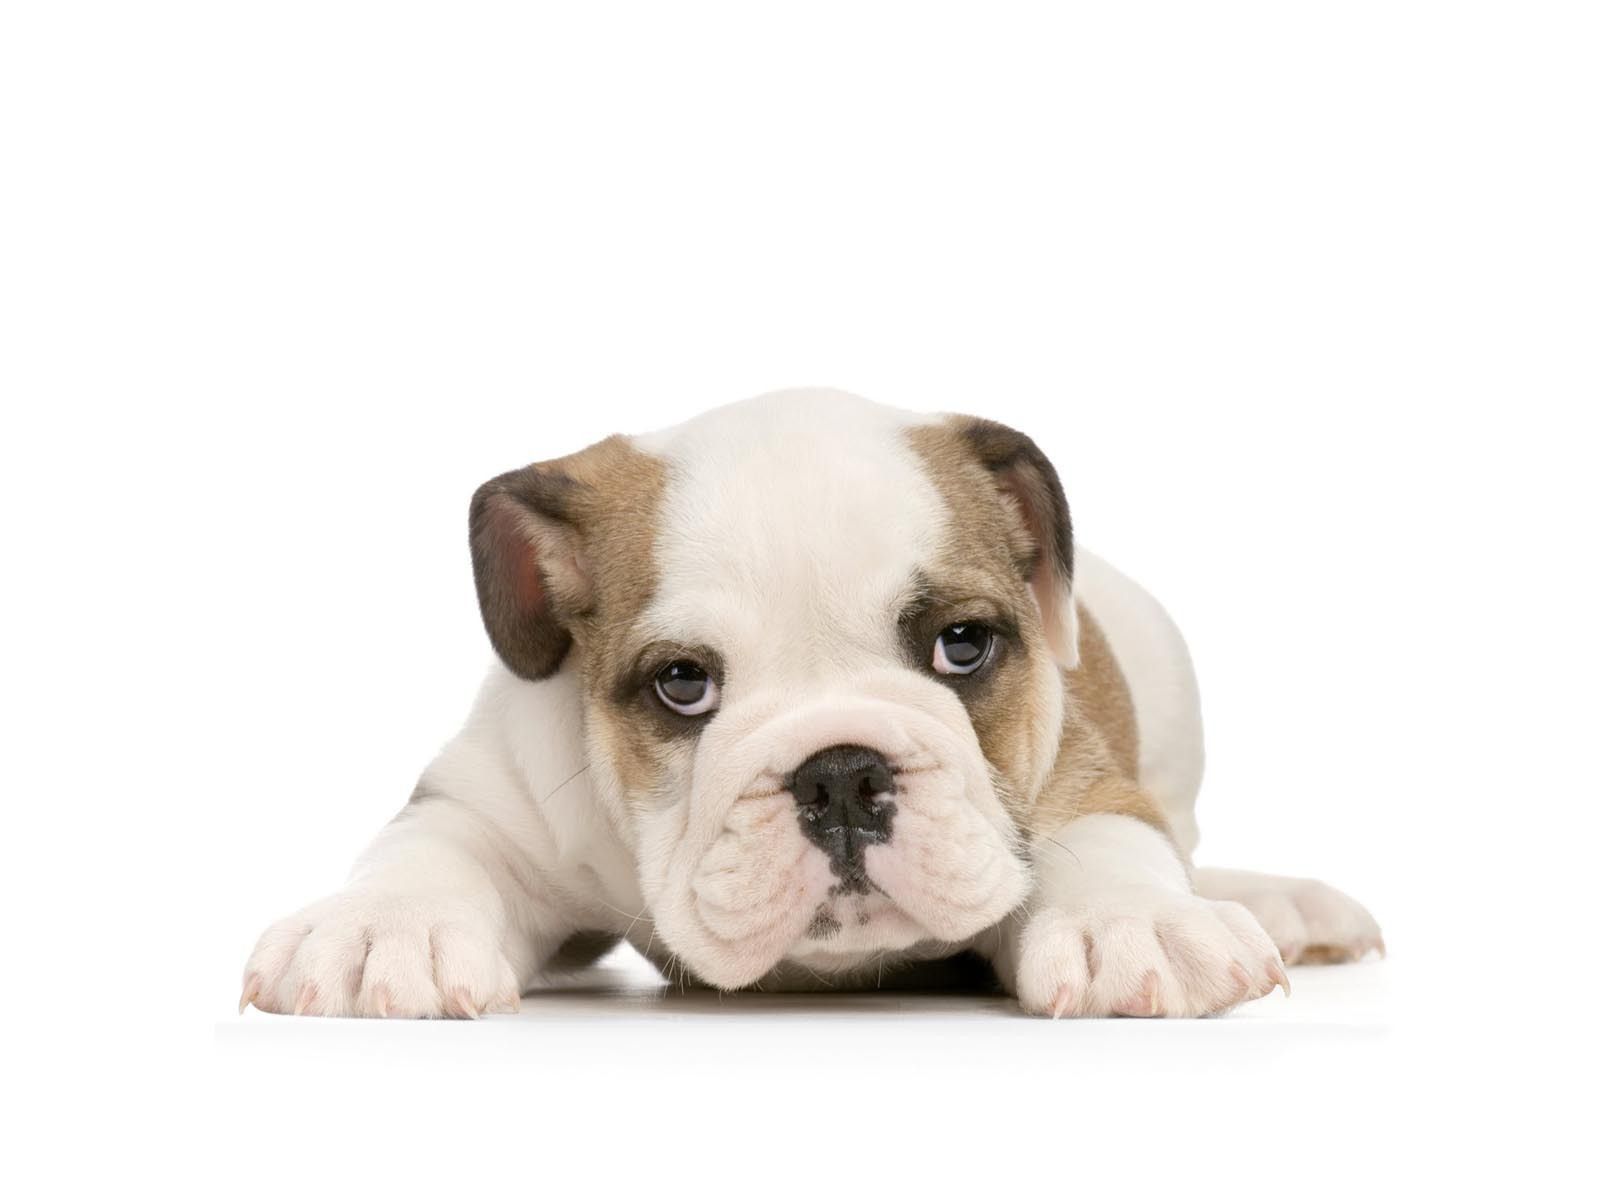 American bulldog puppy on white background Desktop wallpaper 1600x1200